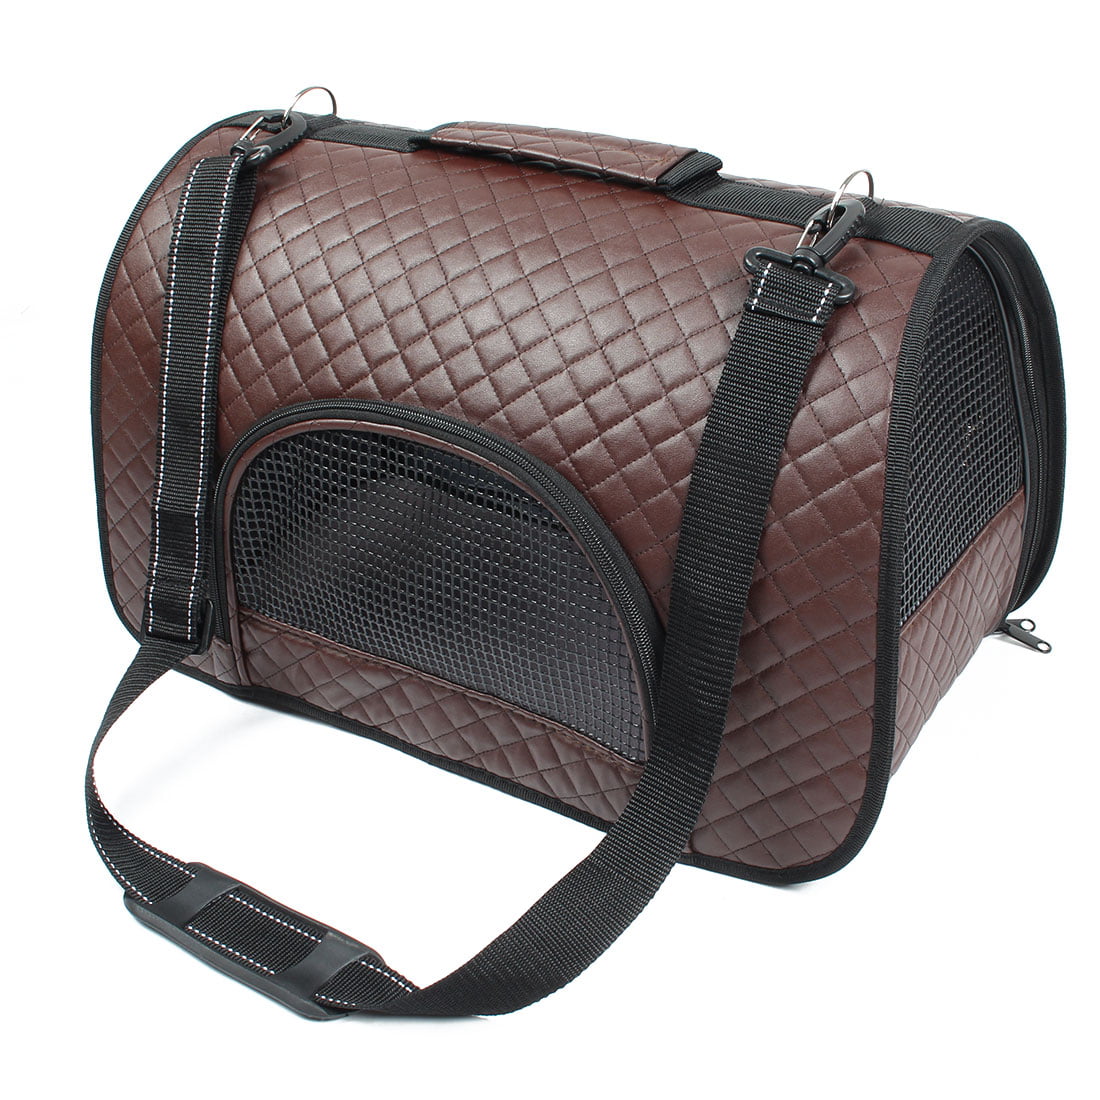 Travel Soft Faux Leather Mesh Zipper Closure Pocket Pet Carrier Tote Bag Brown - 0